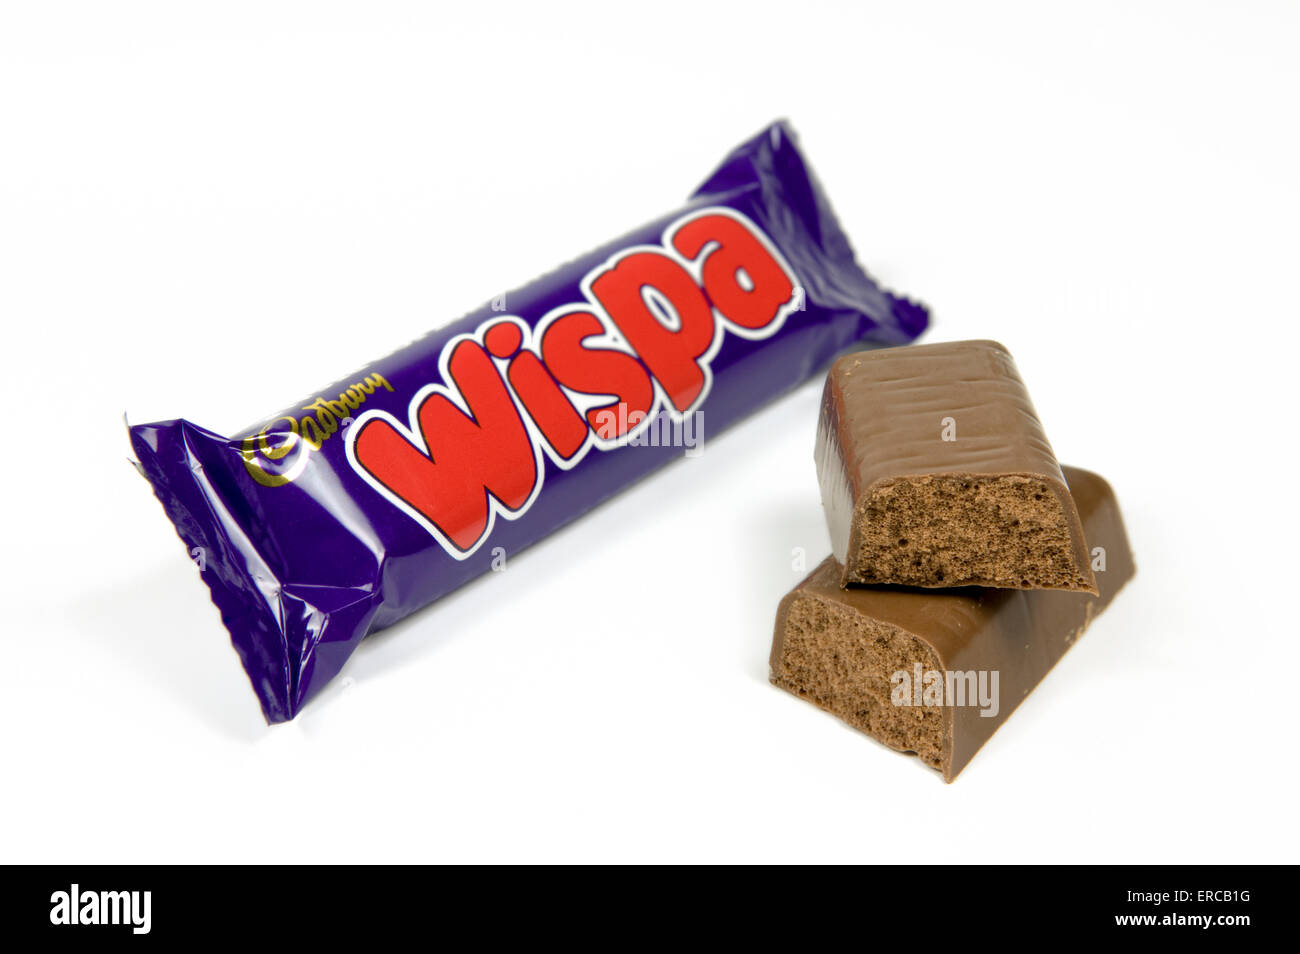 Cadbury Wispa Gold Hazelnut Flavour 48g Box of 48, Chocolate Bars